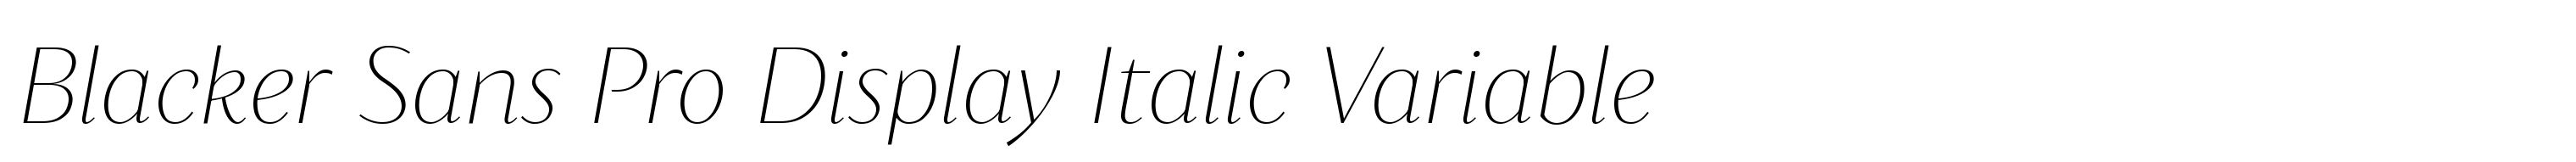 Blacker Sans Pro Display Italic Variable